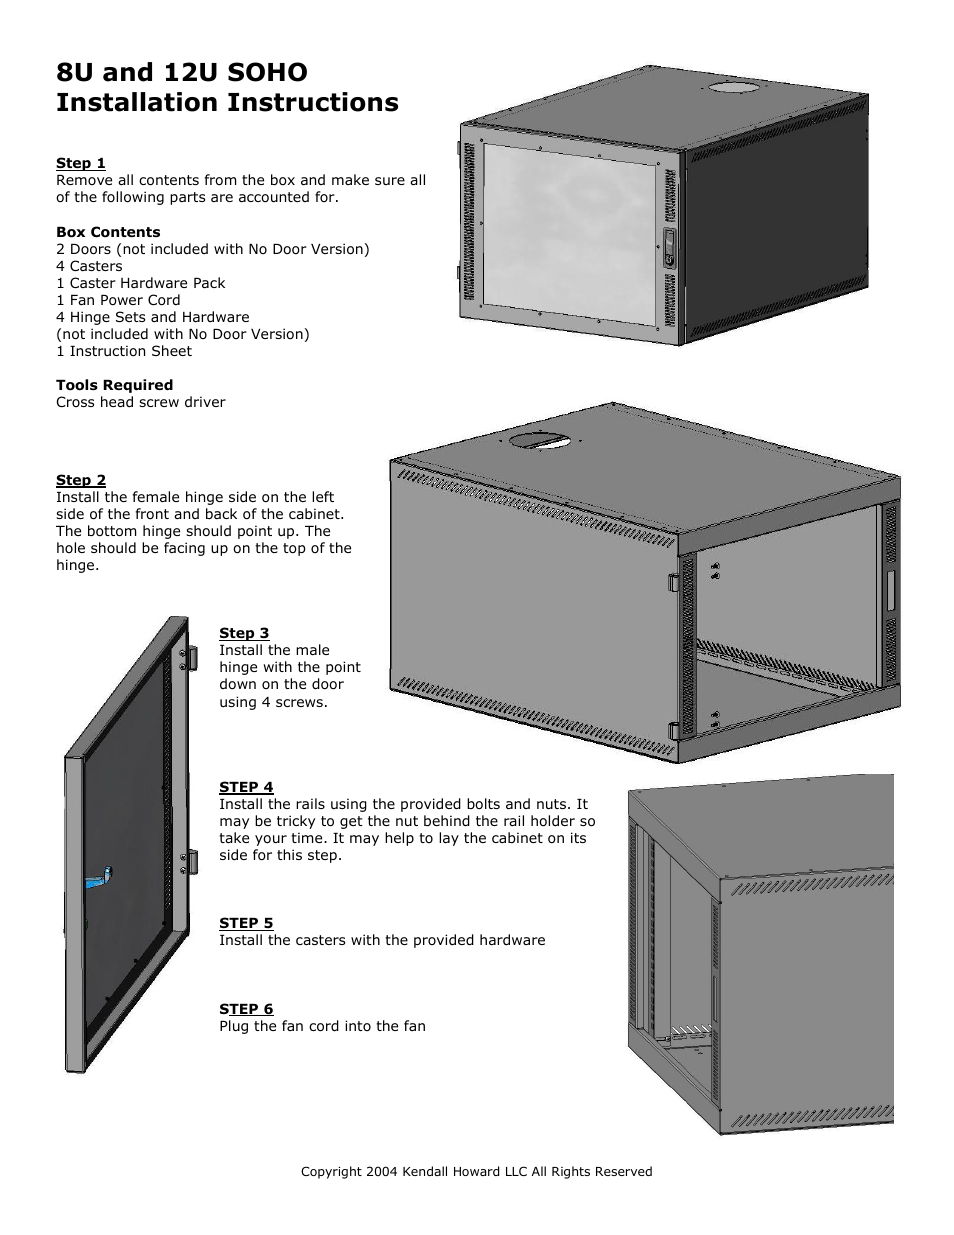 1932-3-201-08 8U Compact SOHO Server Cabinet - No Doors